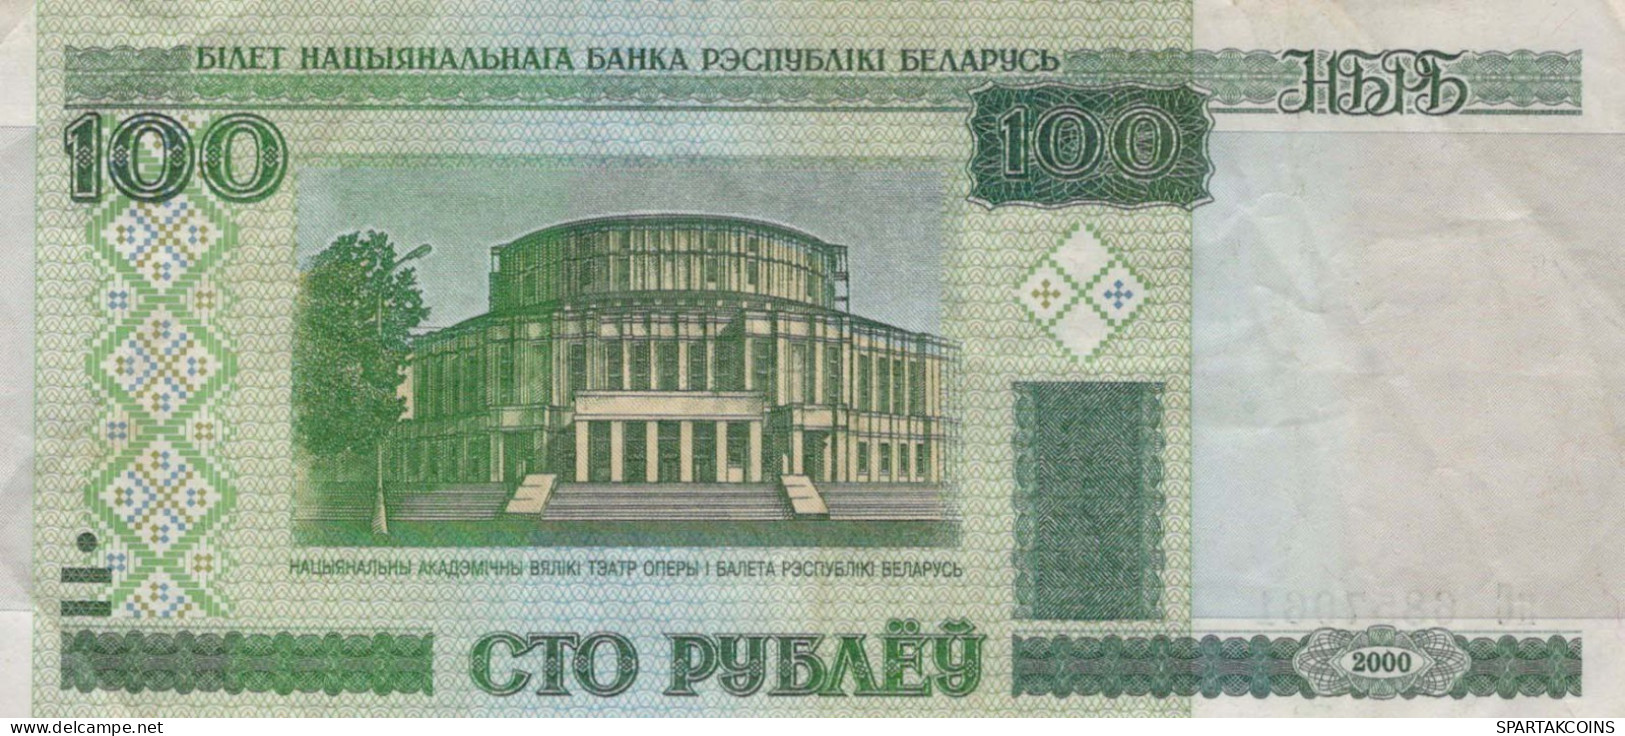 100 RUBLES 2000 BELARUS Papiergeld Banknote #PK611 - [11] Lokale Uitgaven